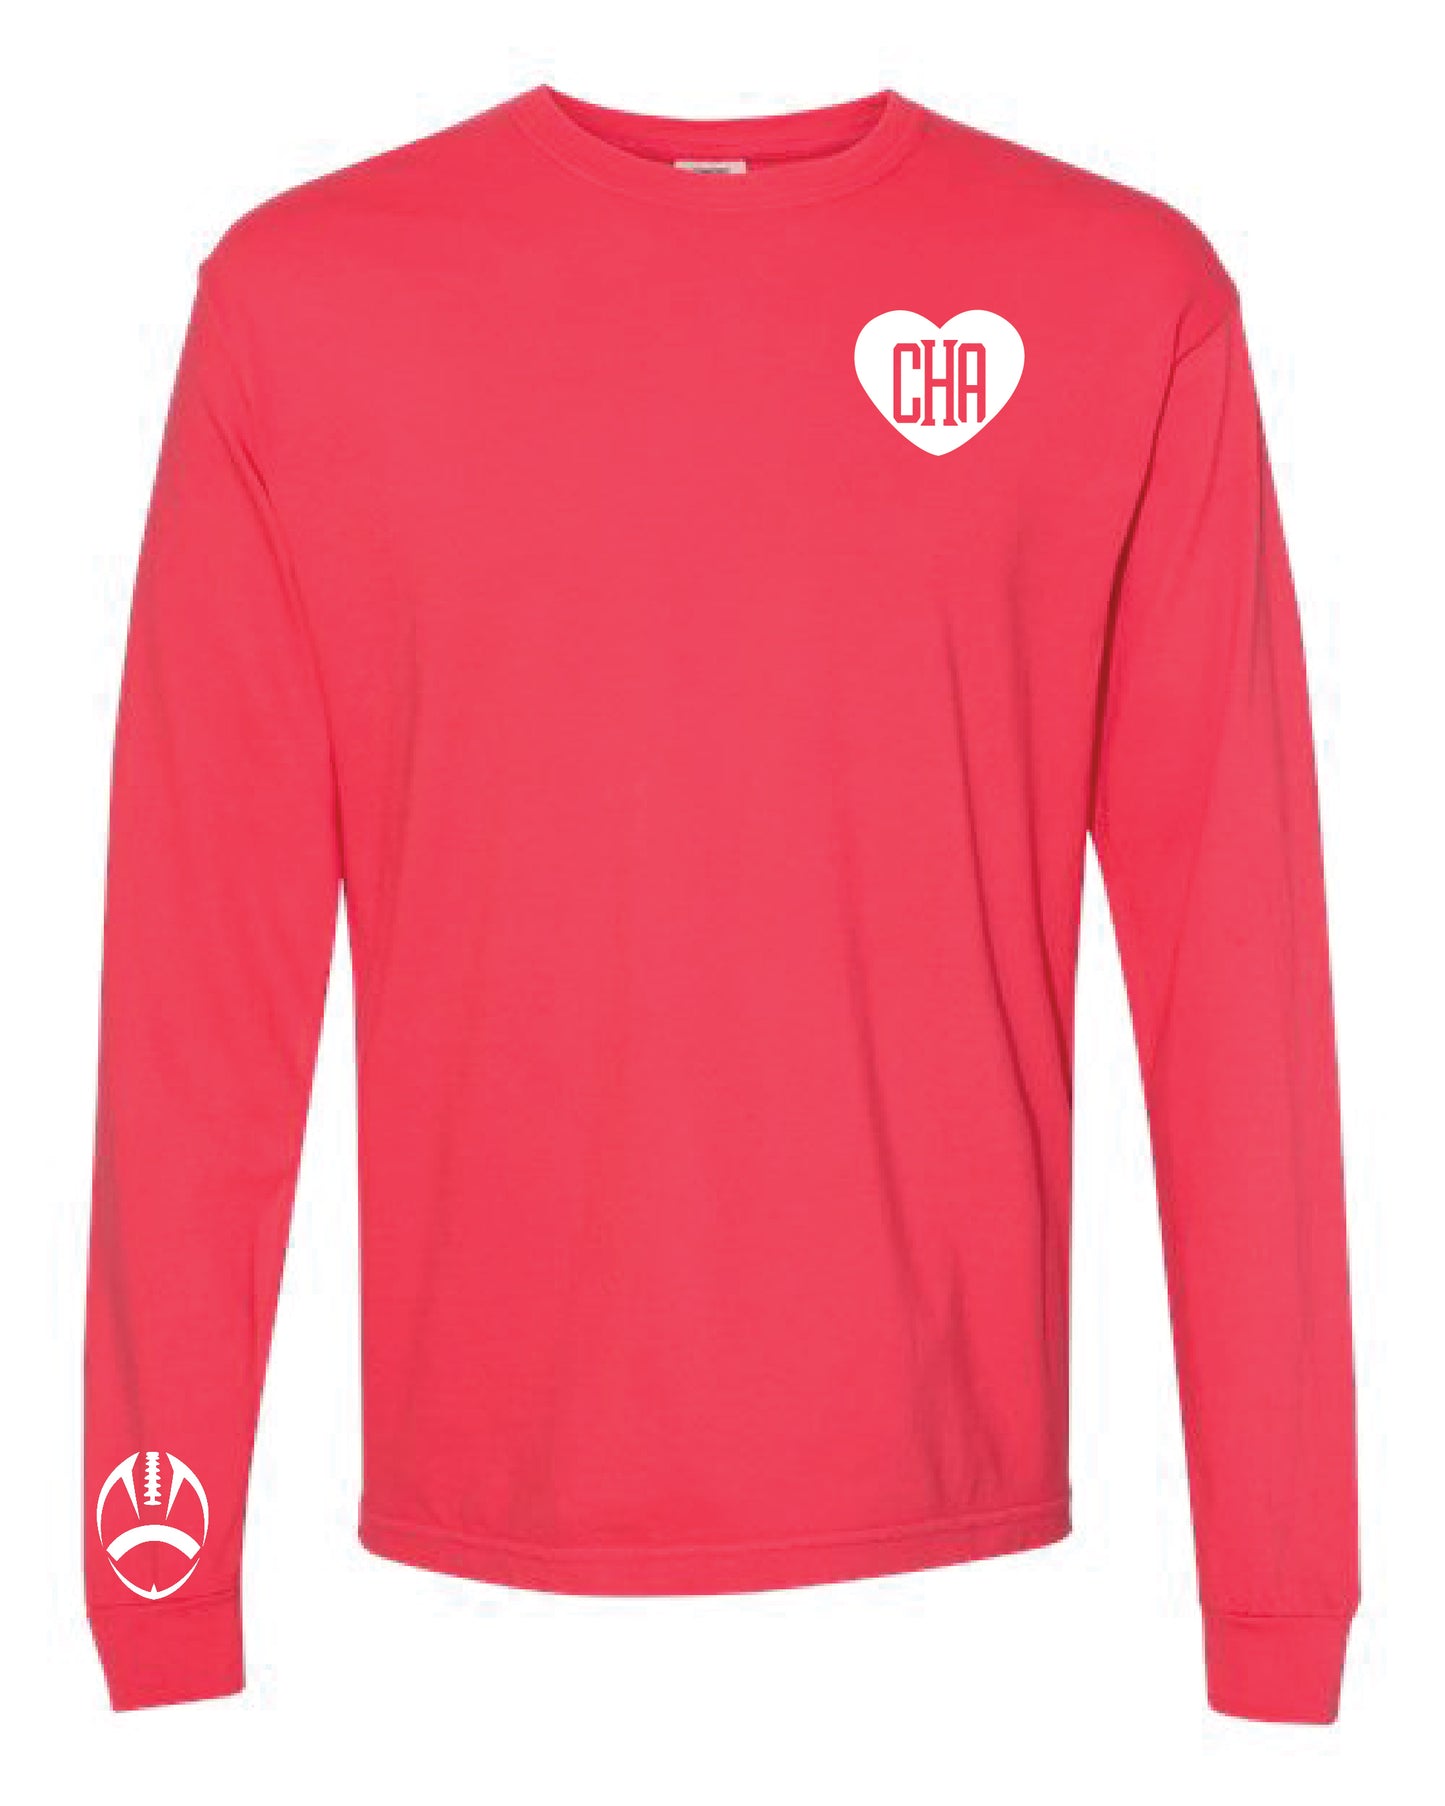 CHA Heart Shirt (Long-Sleeved) - Red